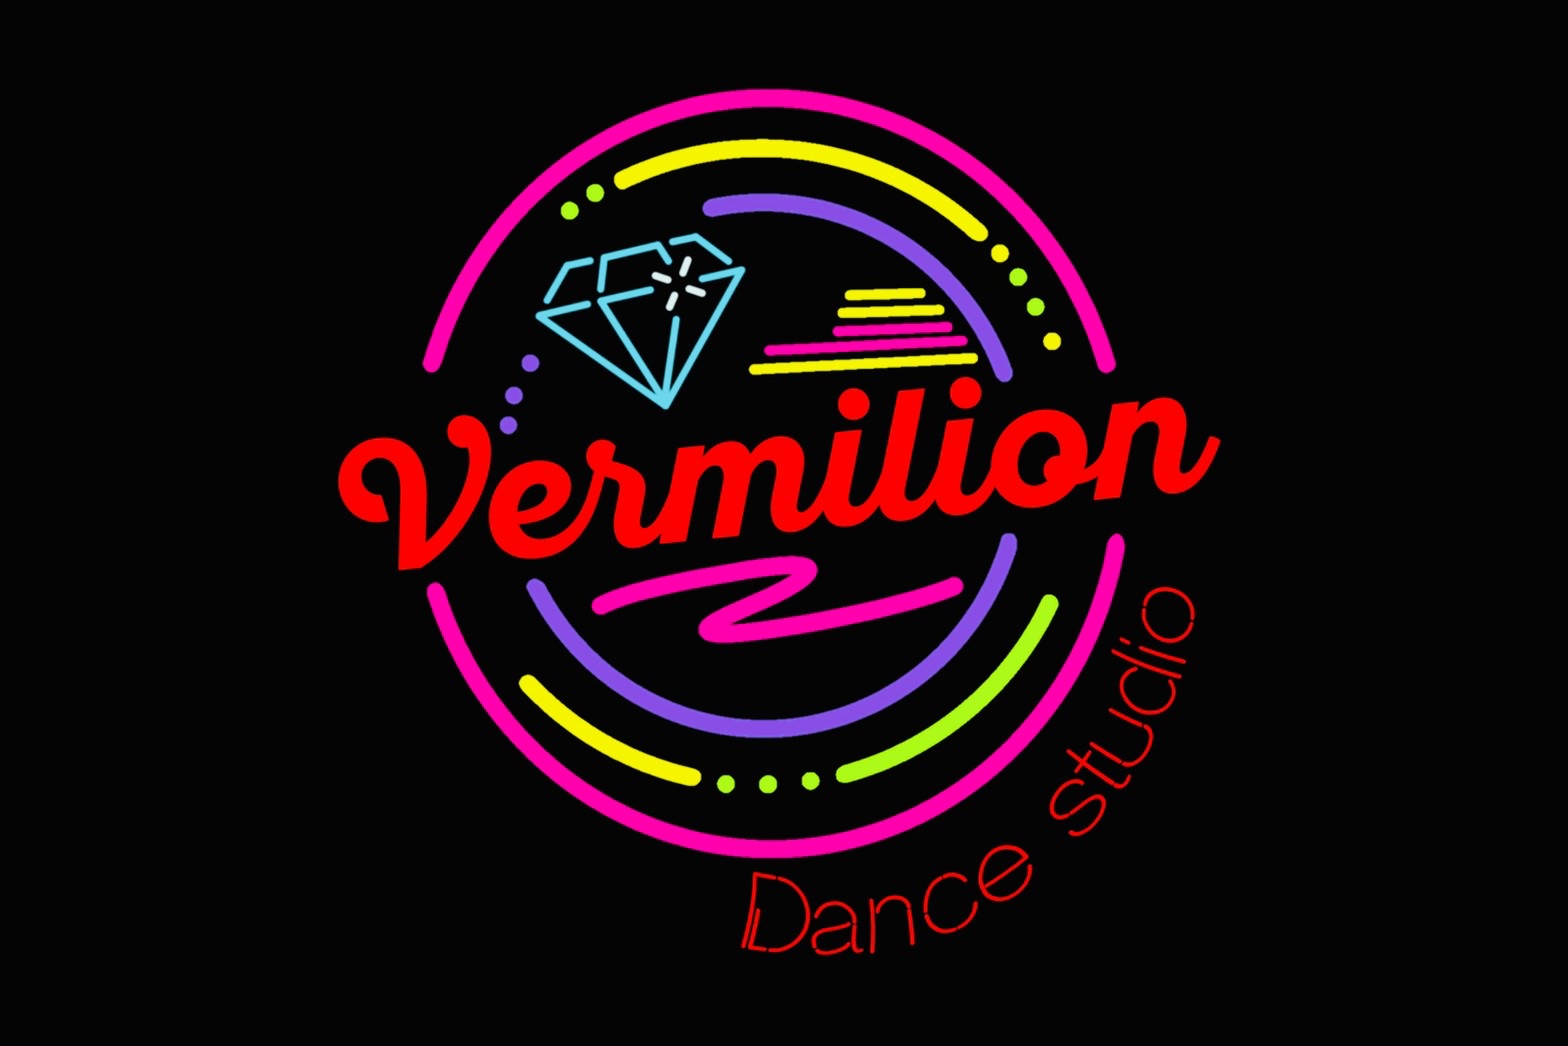 Vermilion Dance Studio 練馬校の雰囲気がわかる写真